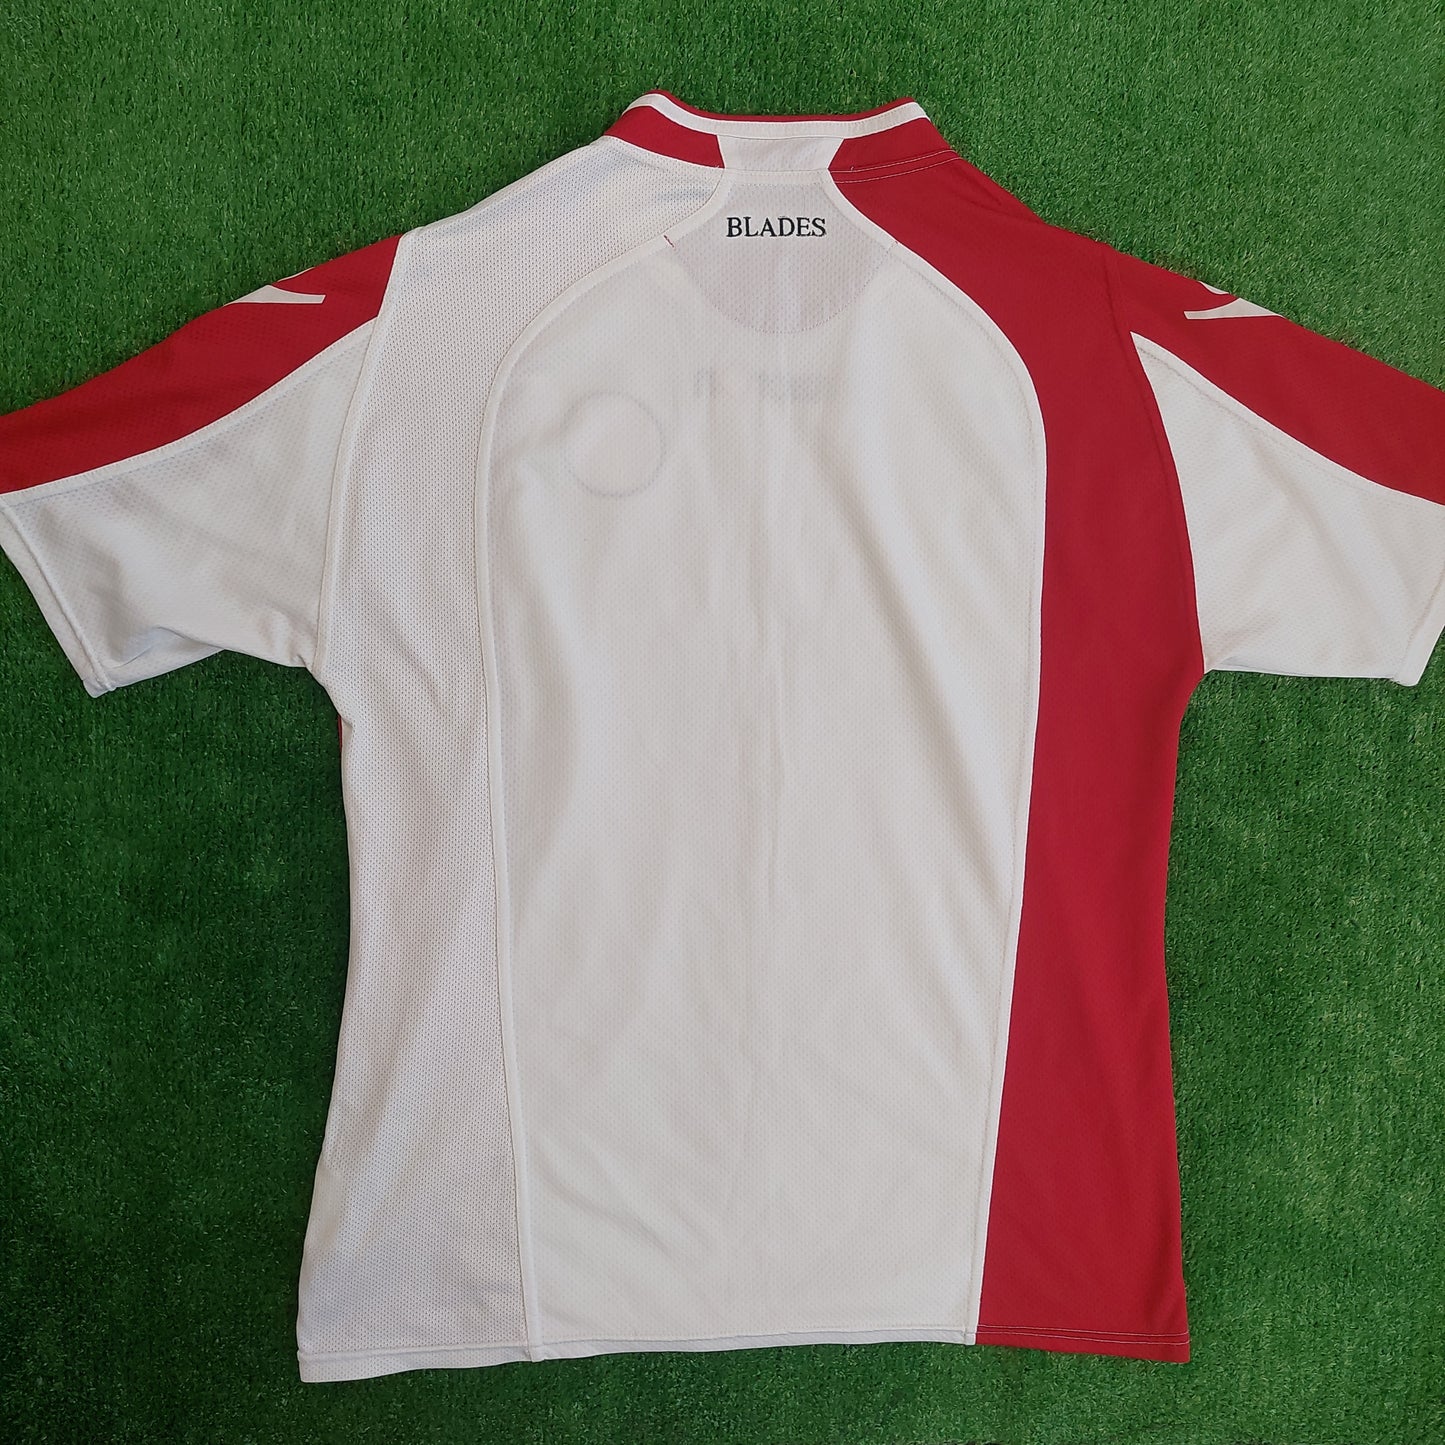 Sheffield United 2009/10 Away Shirt (Very Good) - Size L